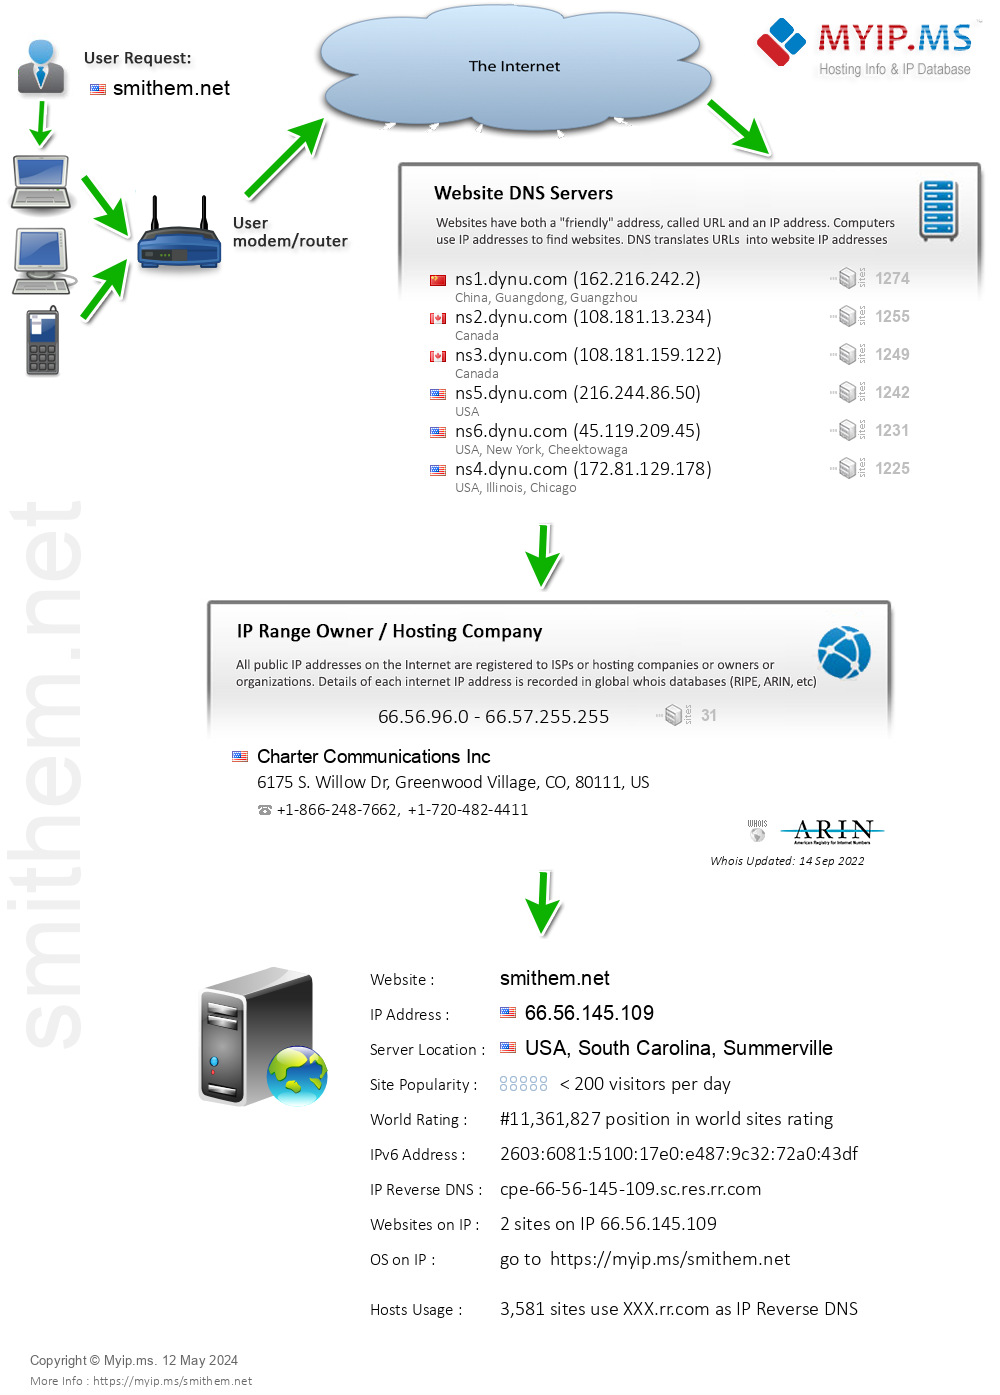 Smithem.net - Website Hosting Visual IP Diagram